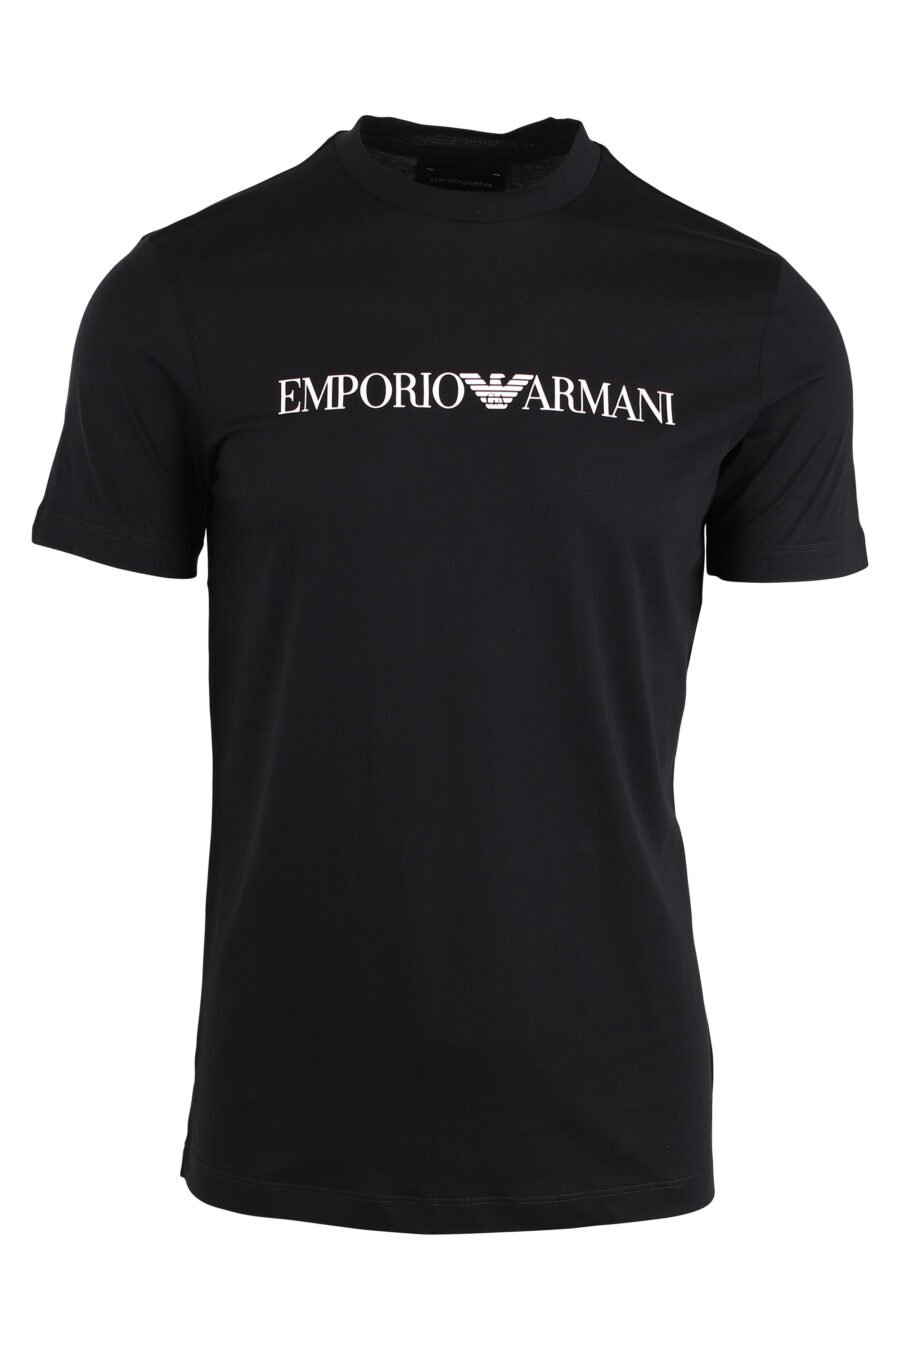 T-shirt black with white lettering maxilogo - IMG 4250